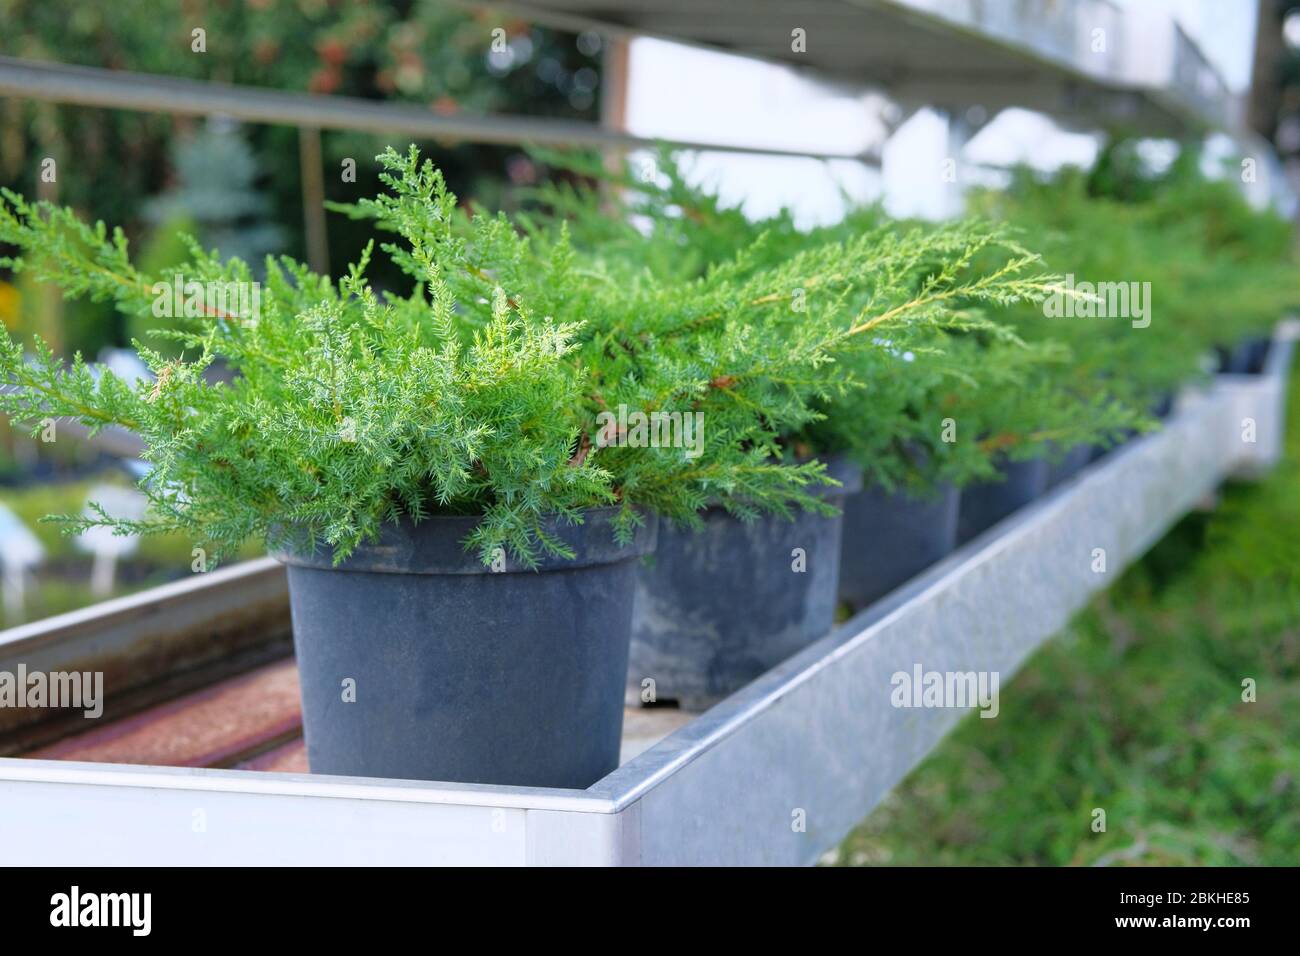 Garden shop. Bushes of green juniper in black pots offered for sale. Fresh branches of evergreen juniper. Stock Photo